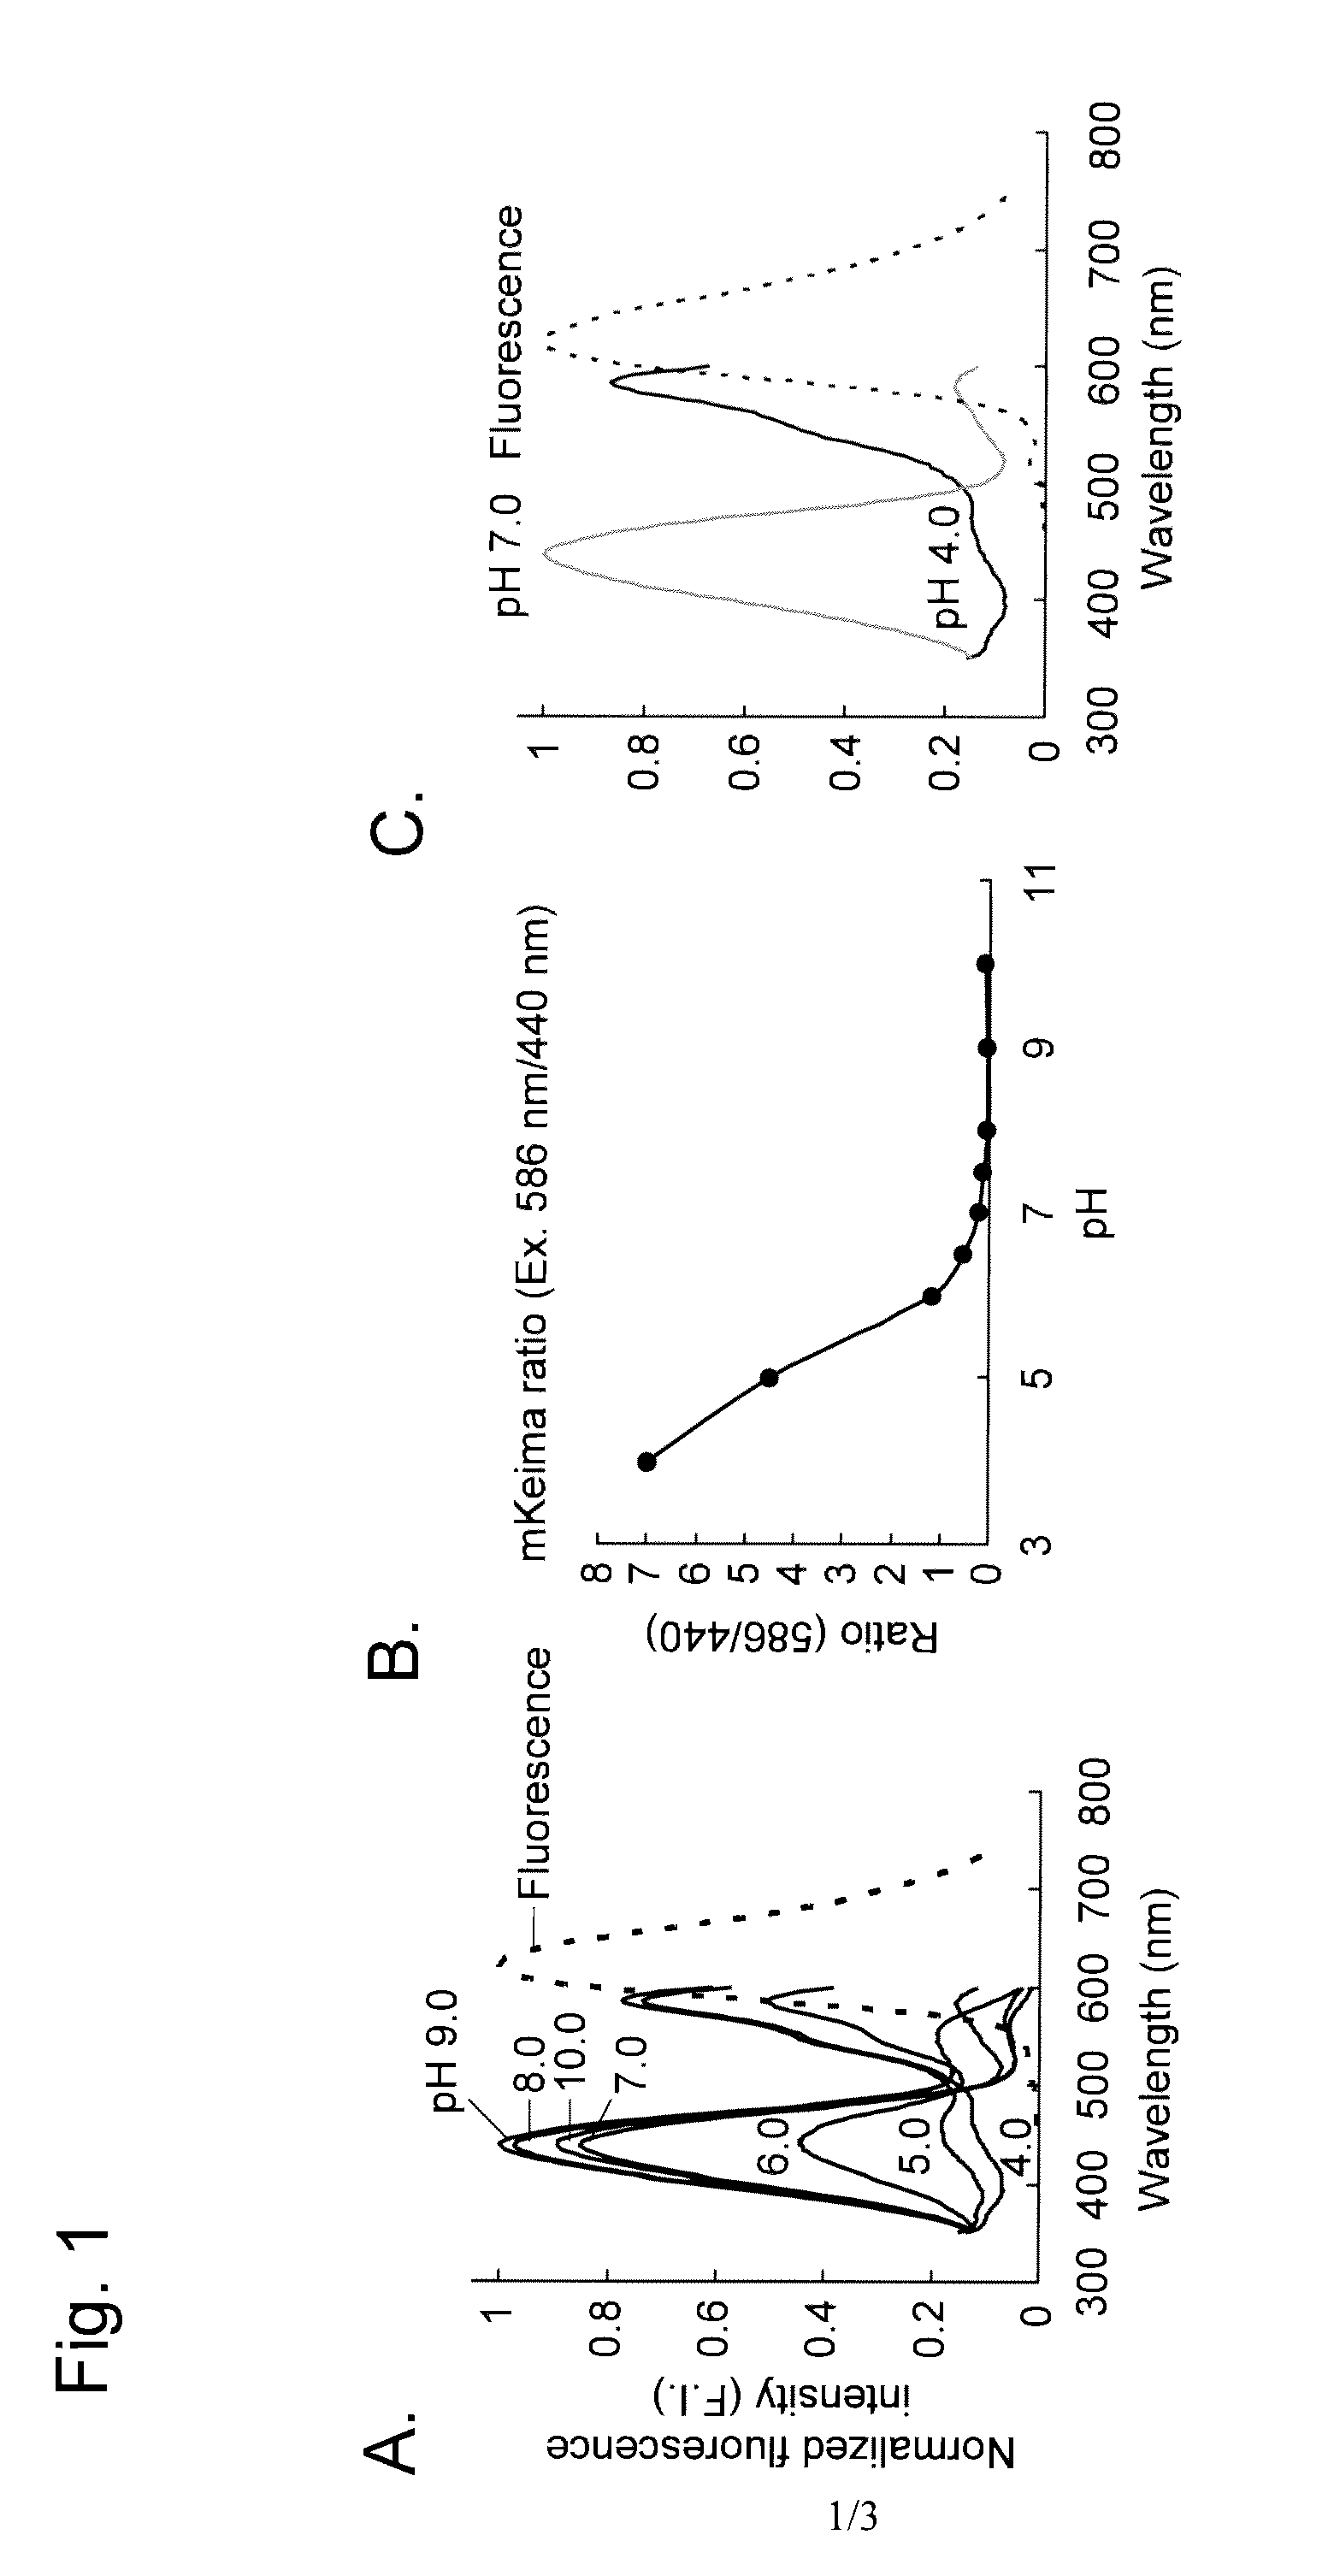 Method for measuring autophagy